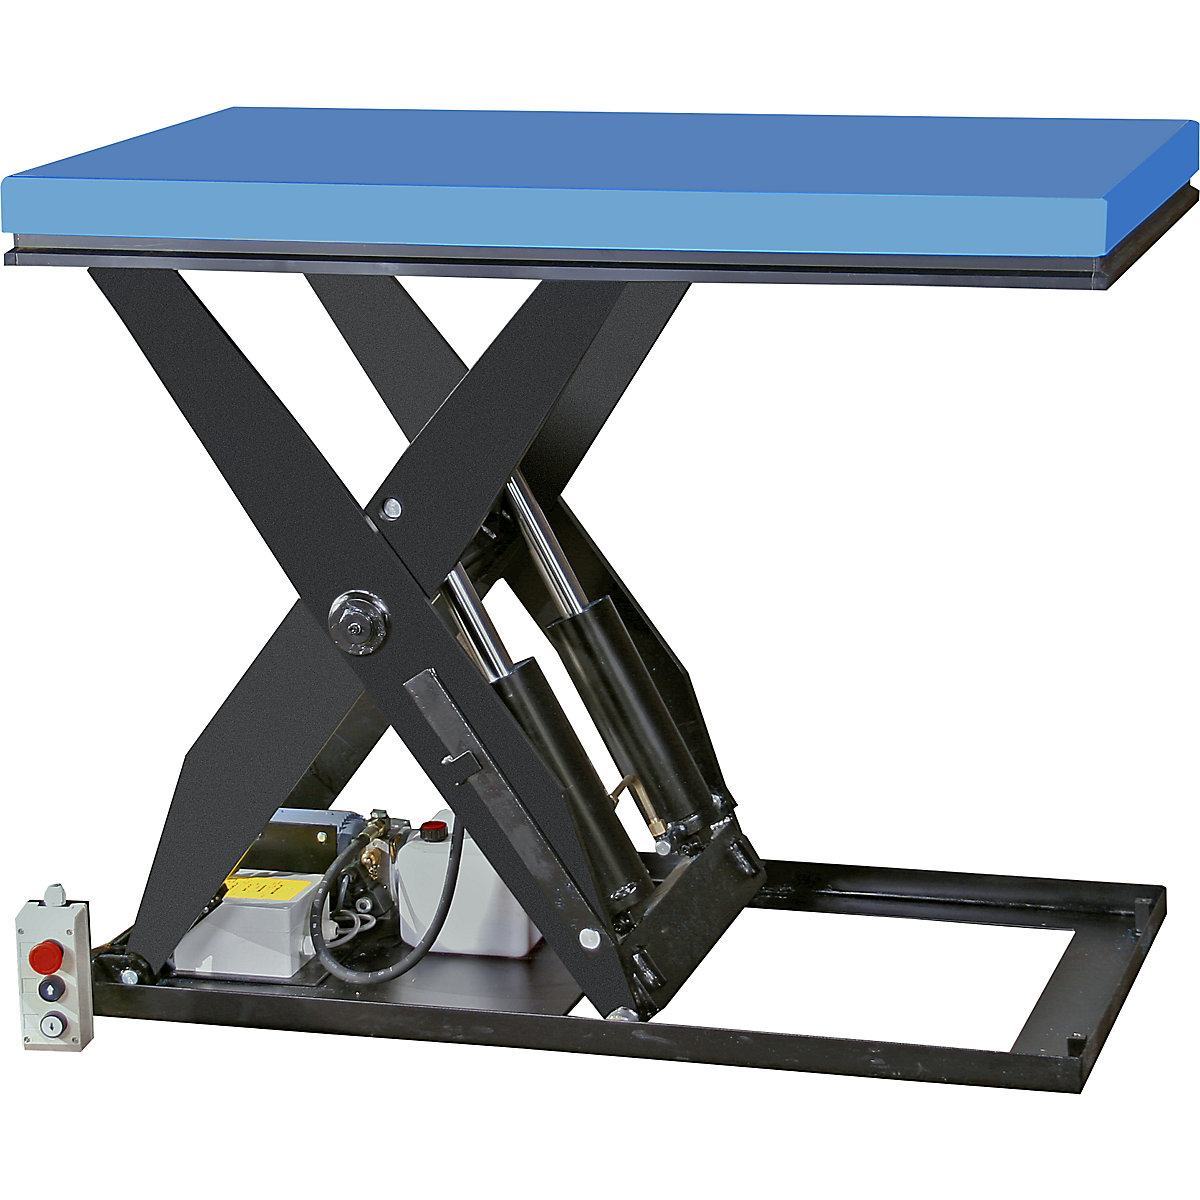 Compact lift table, platform LxW 1300 x 800 mm, max. load 1000 kg, operating voltage 400 V